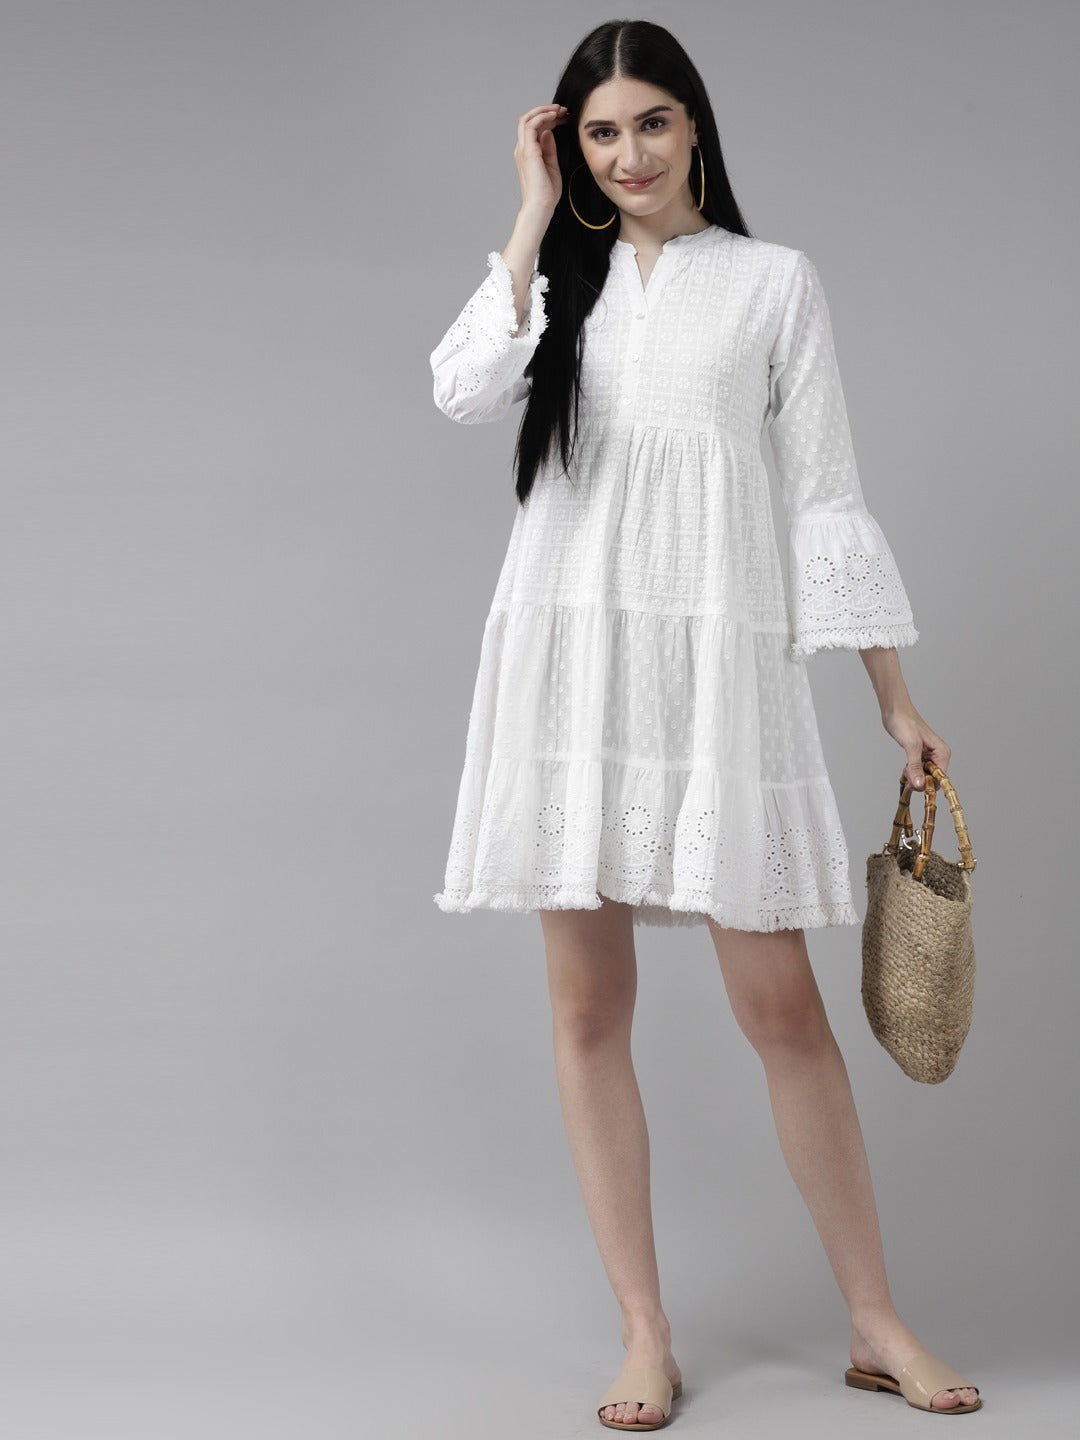 White Cotton A-Line Dress-Yufta Store-9819DRSWHS